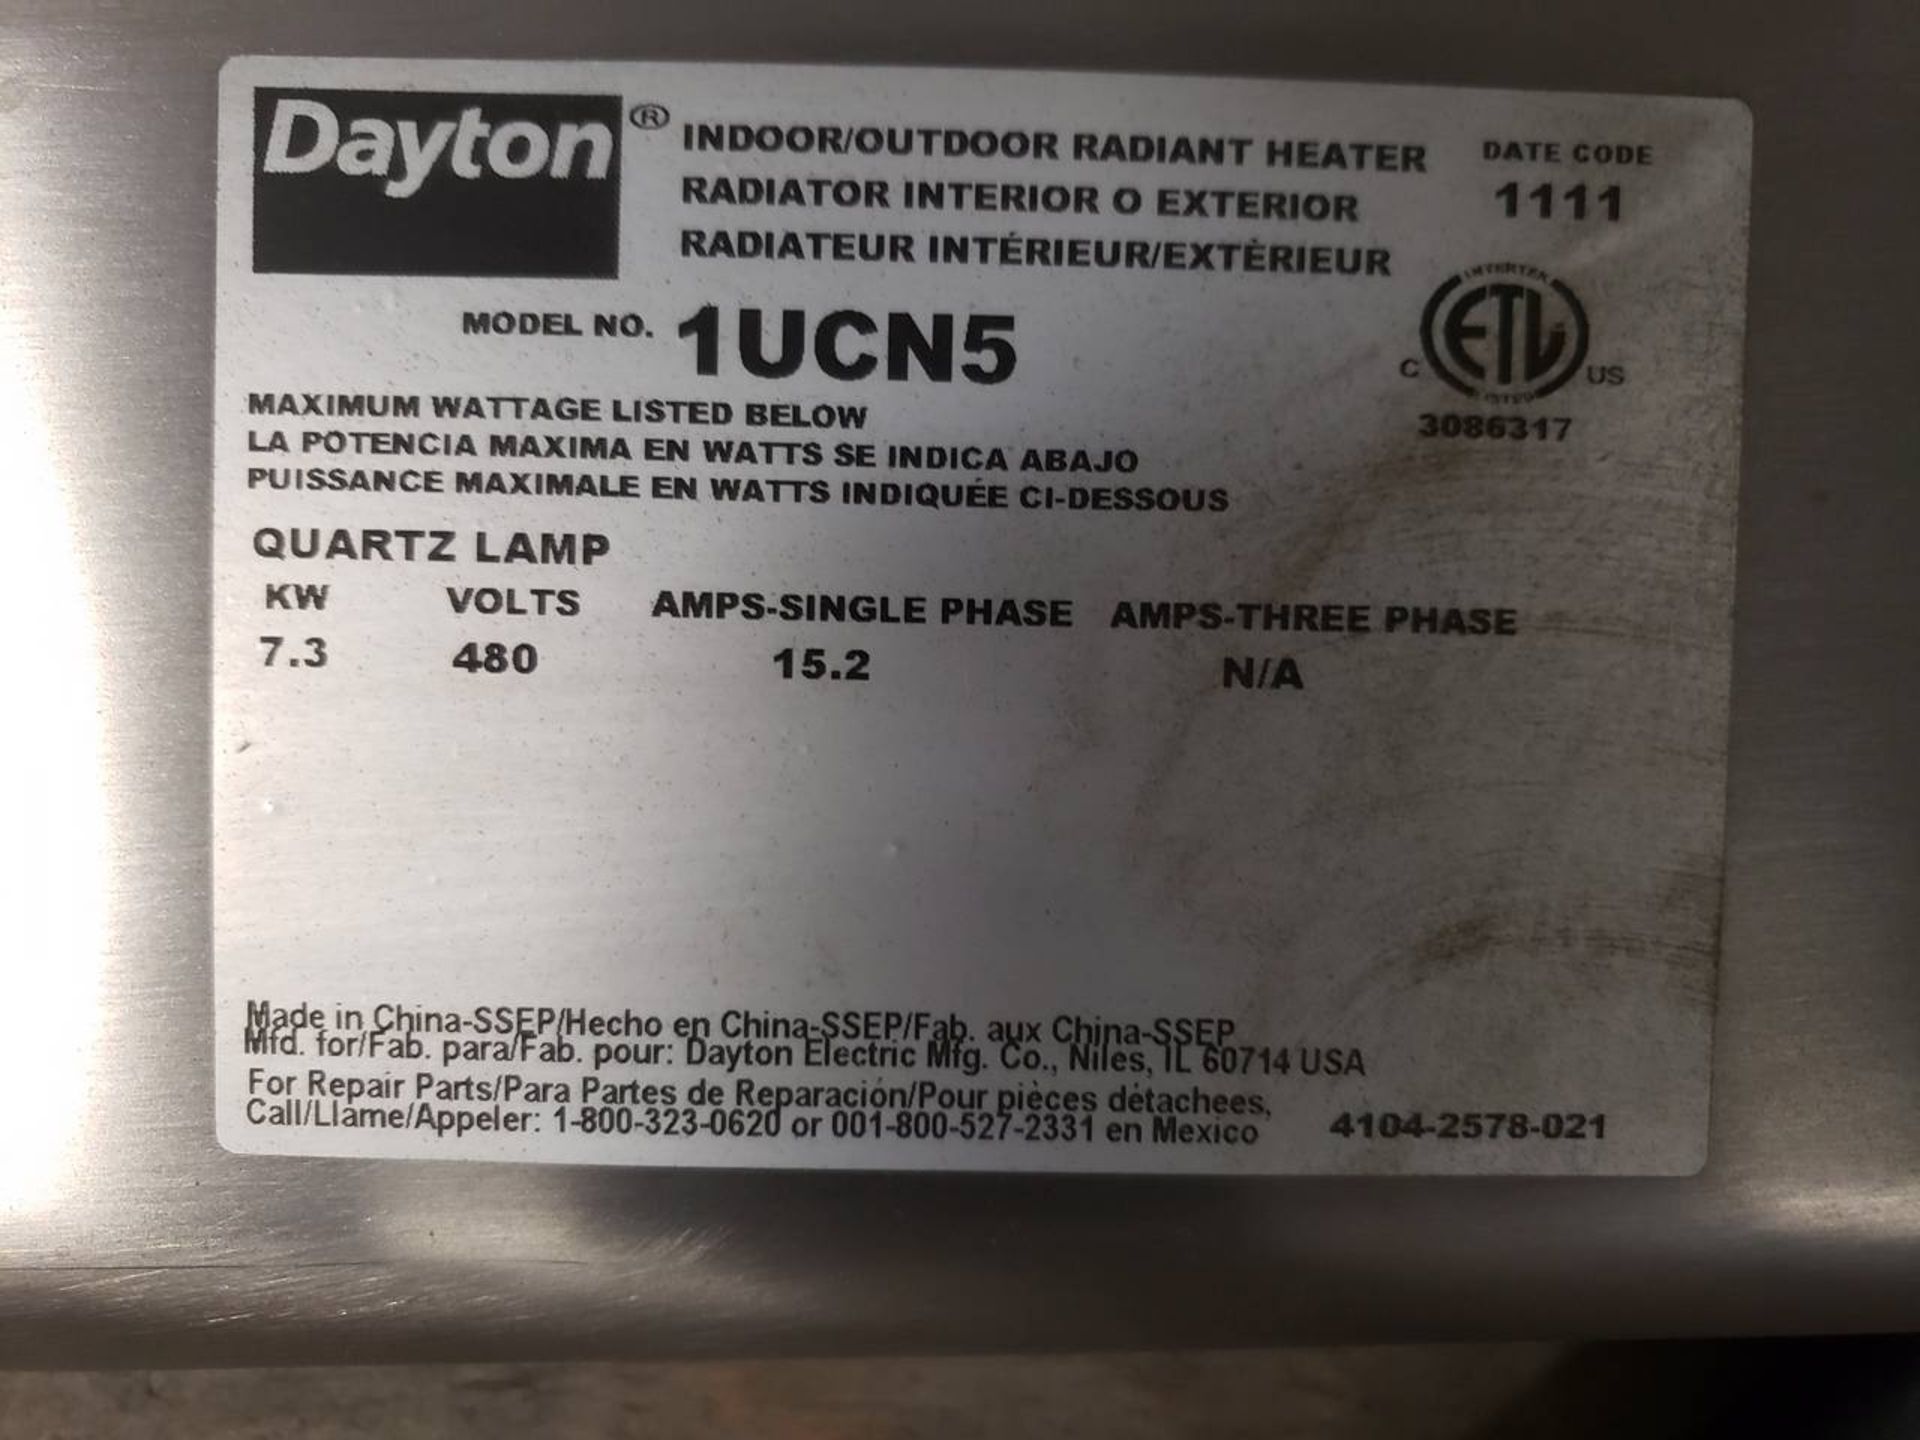 2011 Dayton 1UCN5 Indoor/Outdoor Radiant Heater 7.3KW Quartz Lamp,480V, 15.2A, 1PH - Image 3 of 3